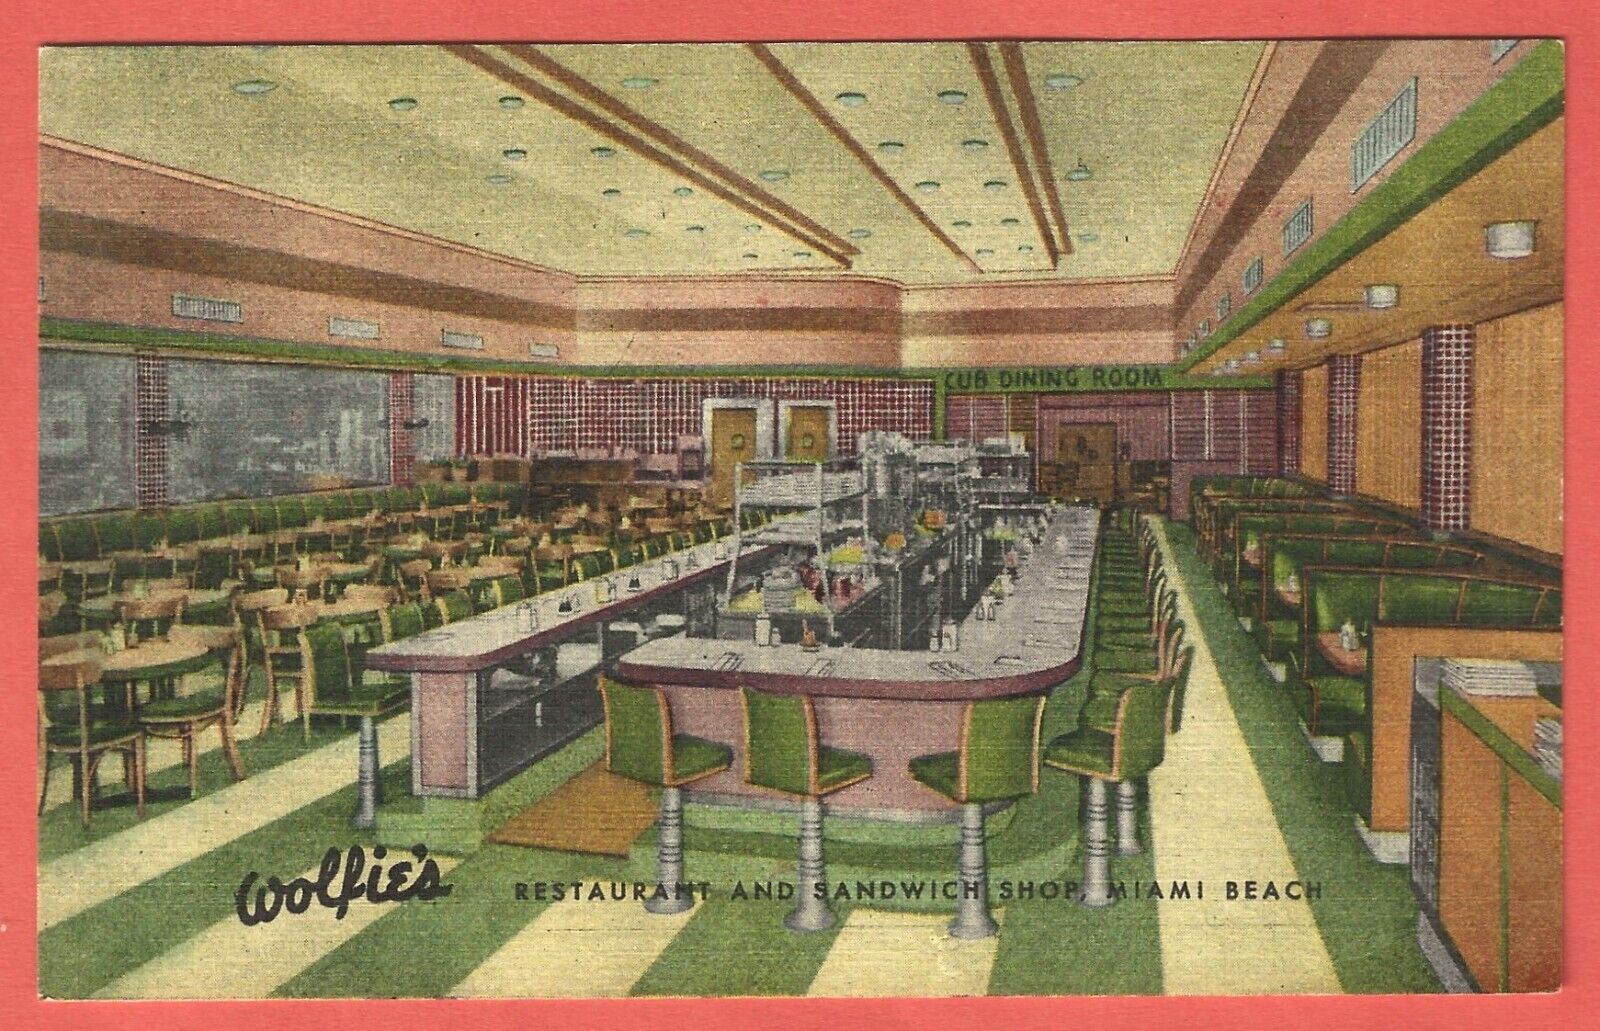 WOLFIE’S RESTAURANT & SANDWICH SHOP, MIAMI BEACH, FLA. - 1956 Linen Postcard